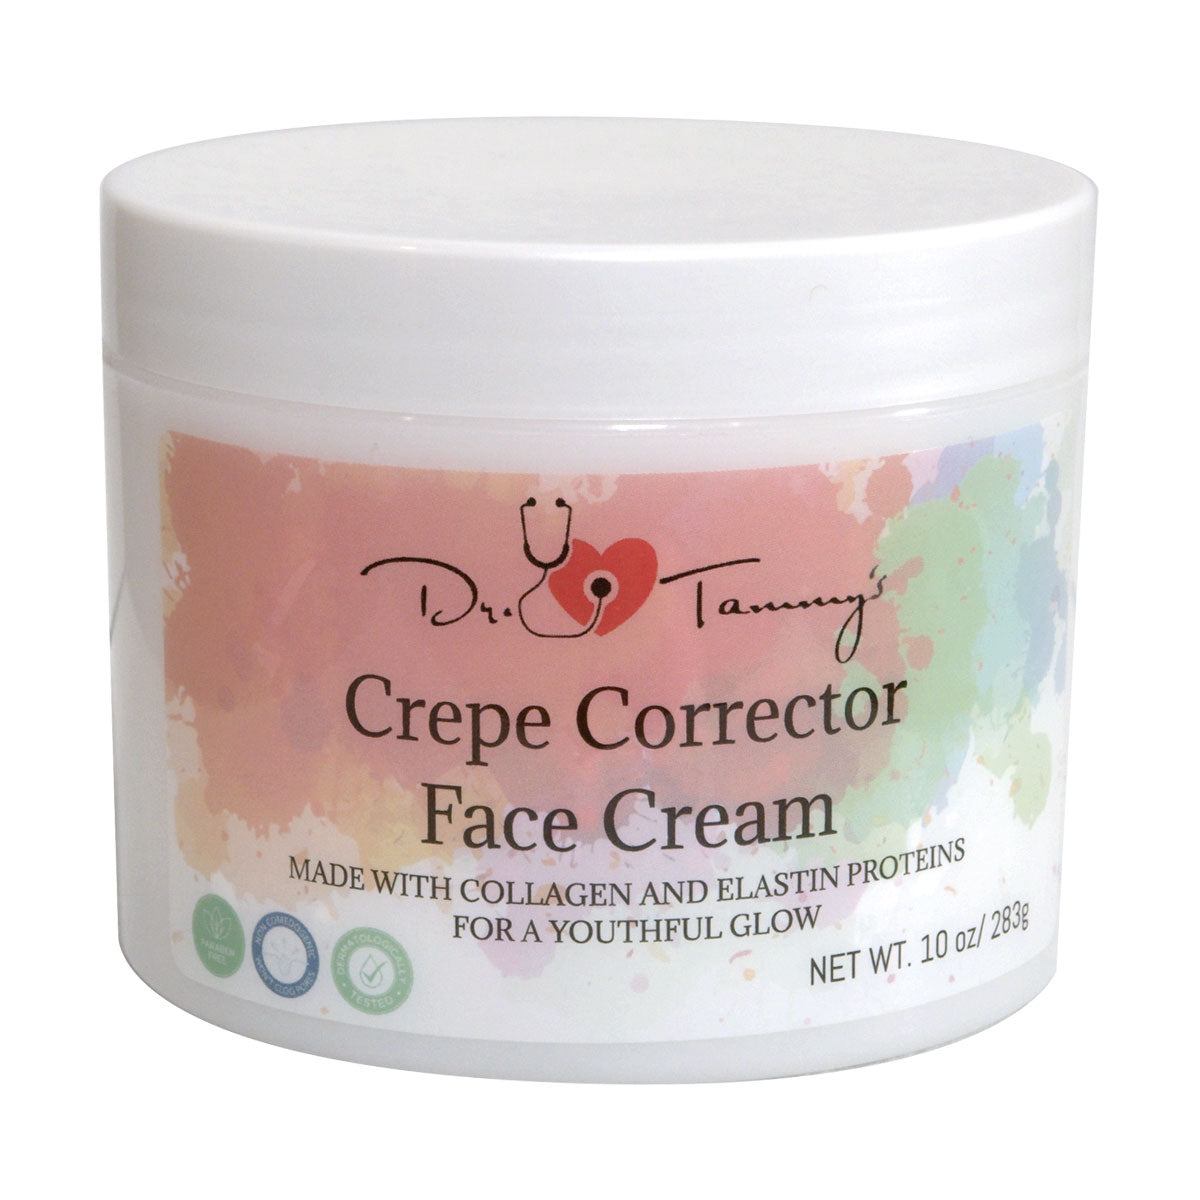 Crepe Corrector Face Cream